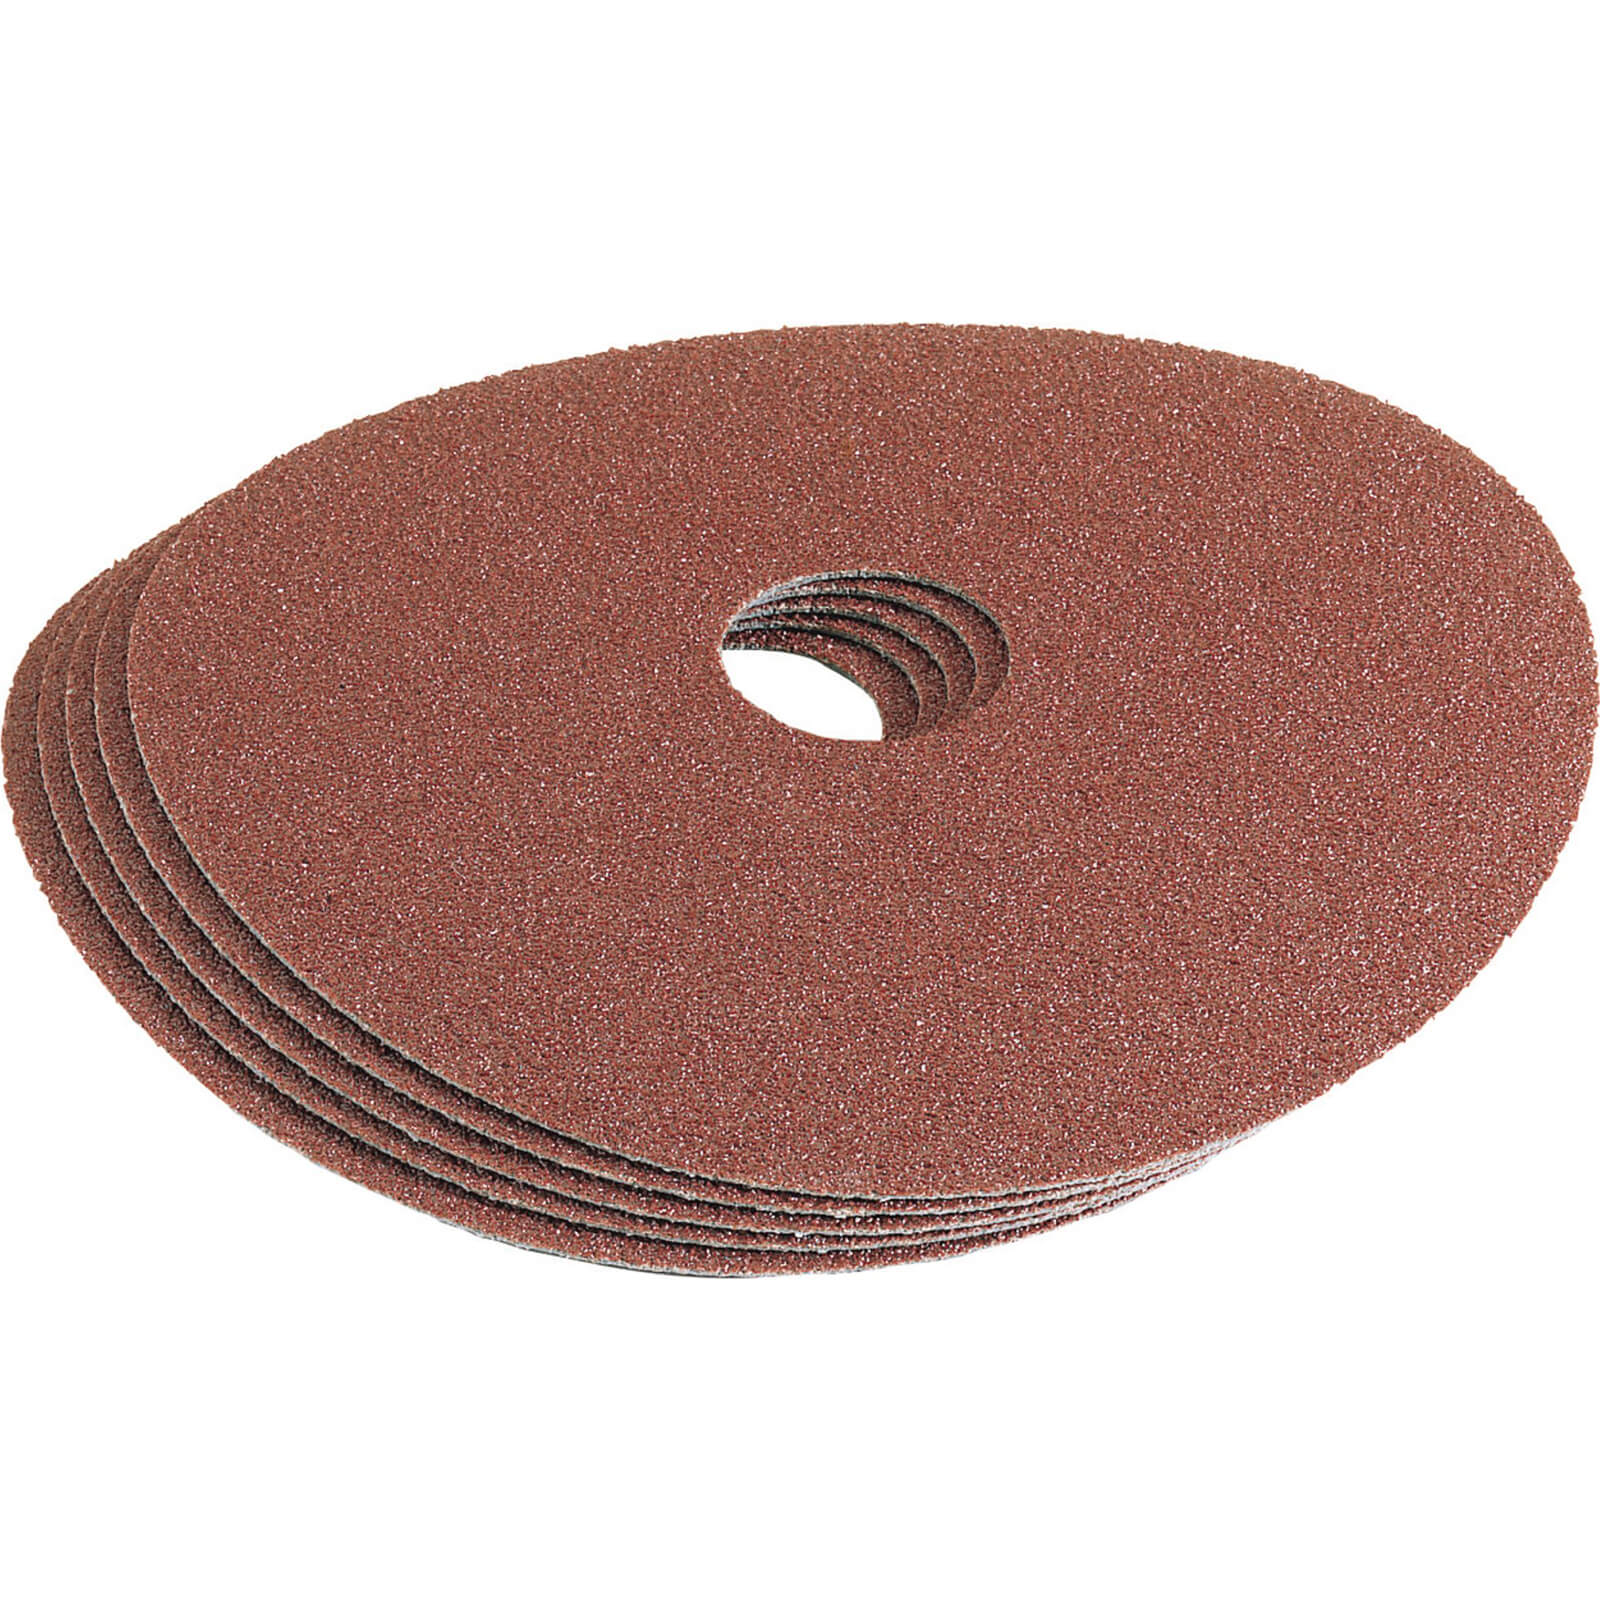 Image of Draper 115mm Aluminium Oxide Sanding Discs 115mm 60g Pack of 5